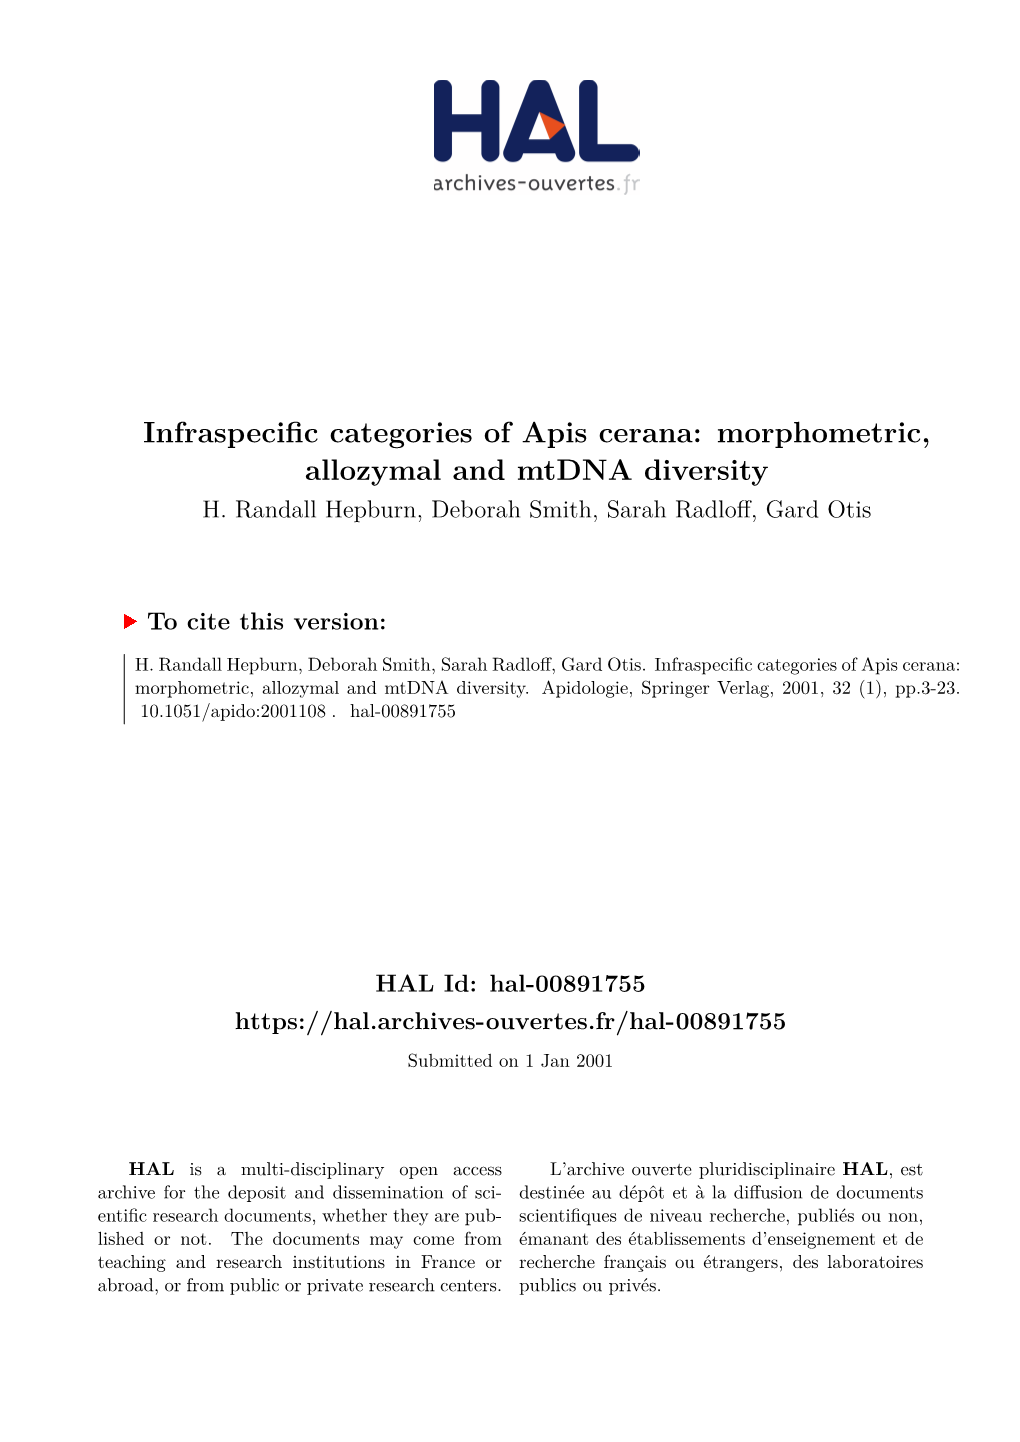 Infraspecific Categories of Apis Cerana: Morphometric, Allozymal and Mtdna Diversity H